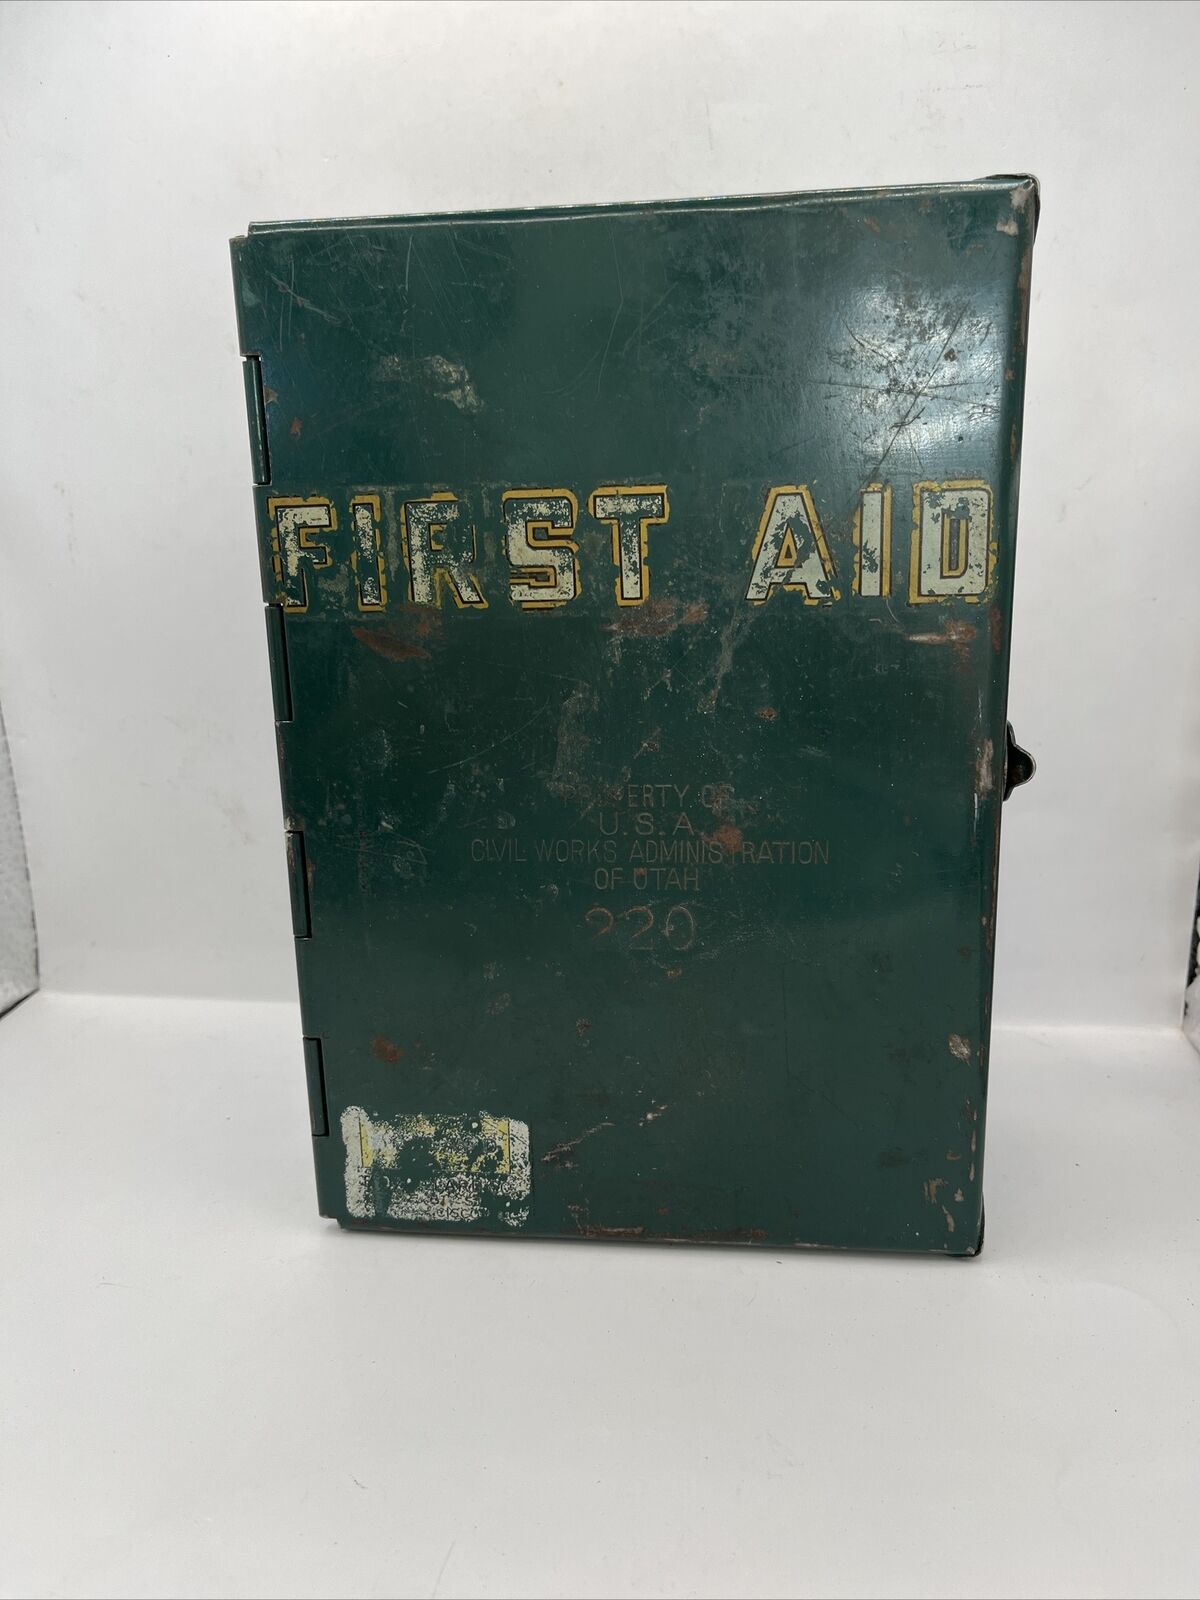 Vintage Industrial First Aid Kit 1960's USA Civil Works Administration Of UTAH